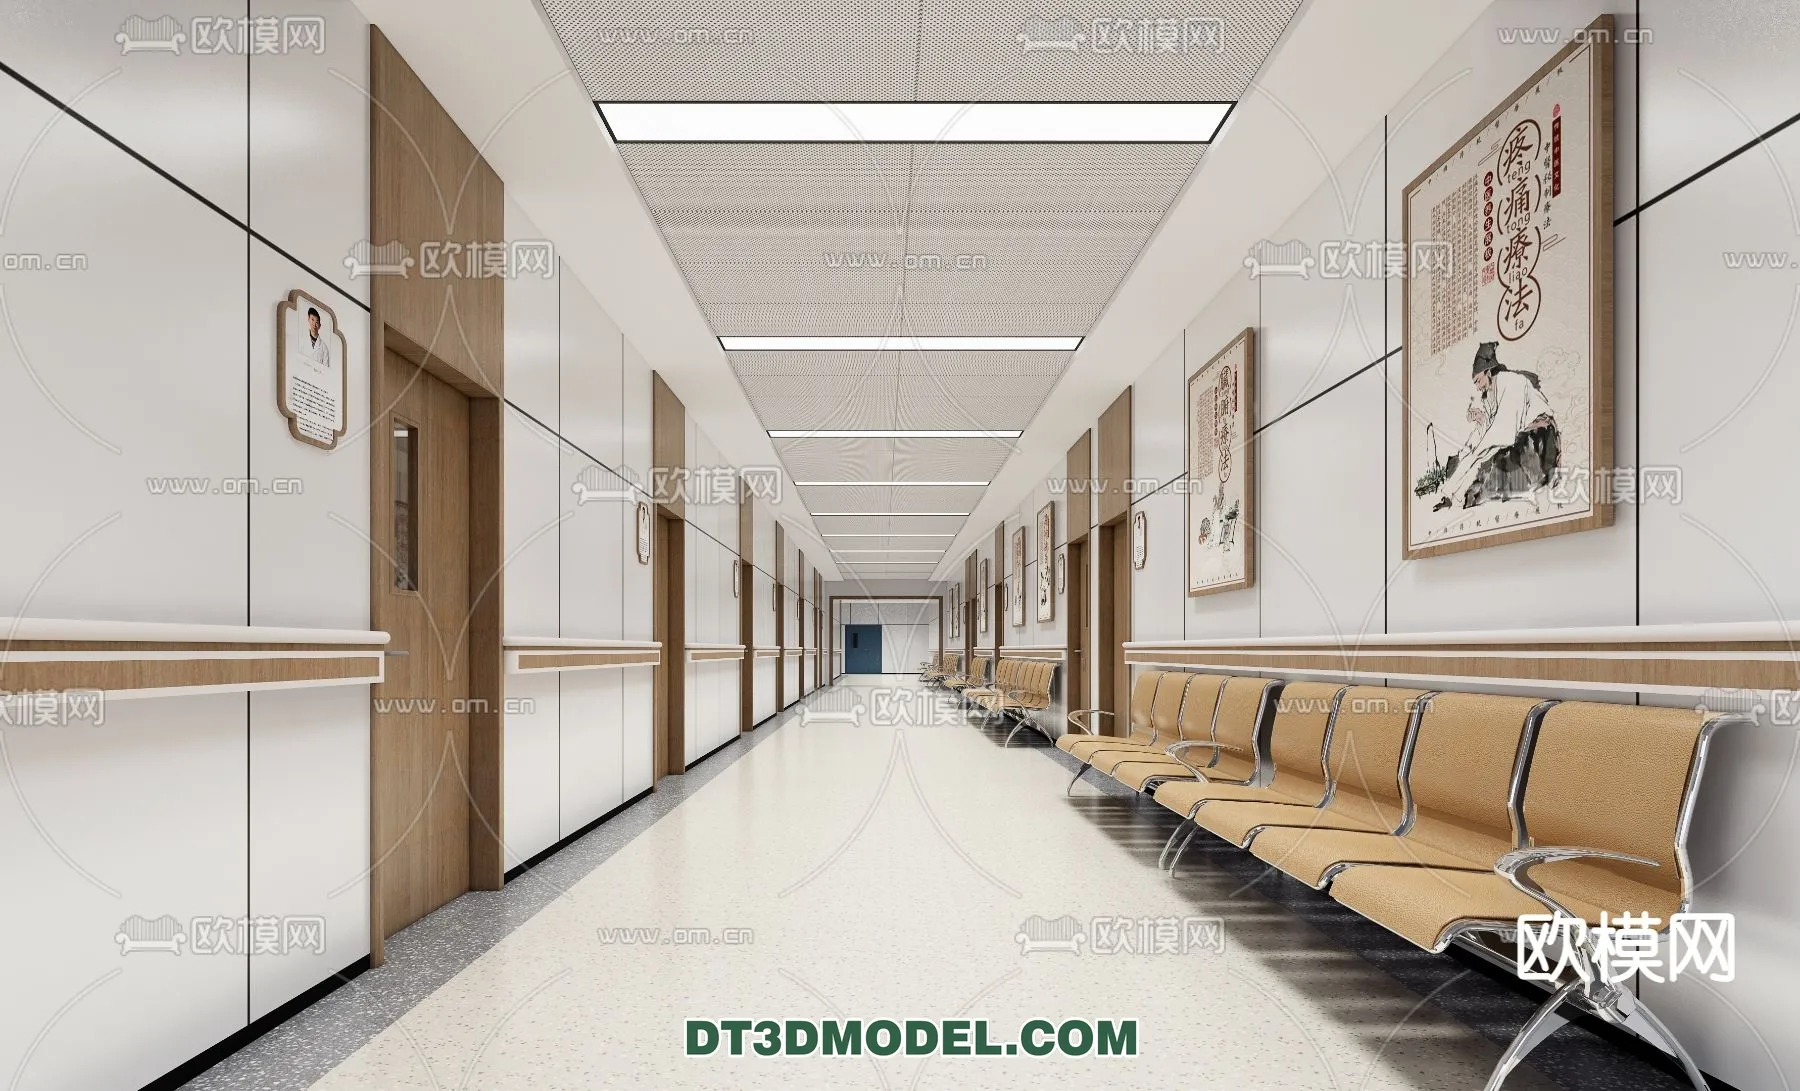 HOSPITAL 3D SCENES – MODERN – 0110